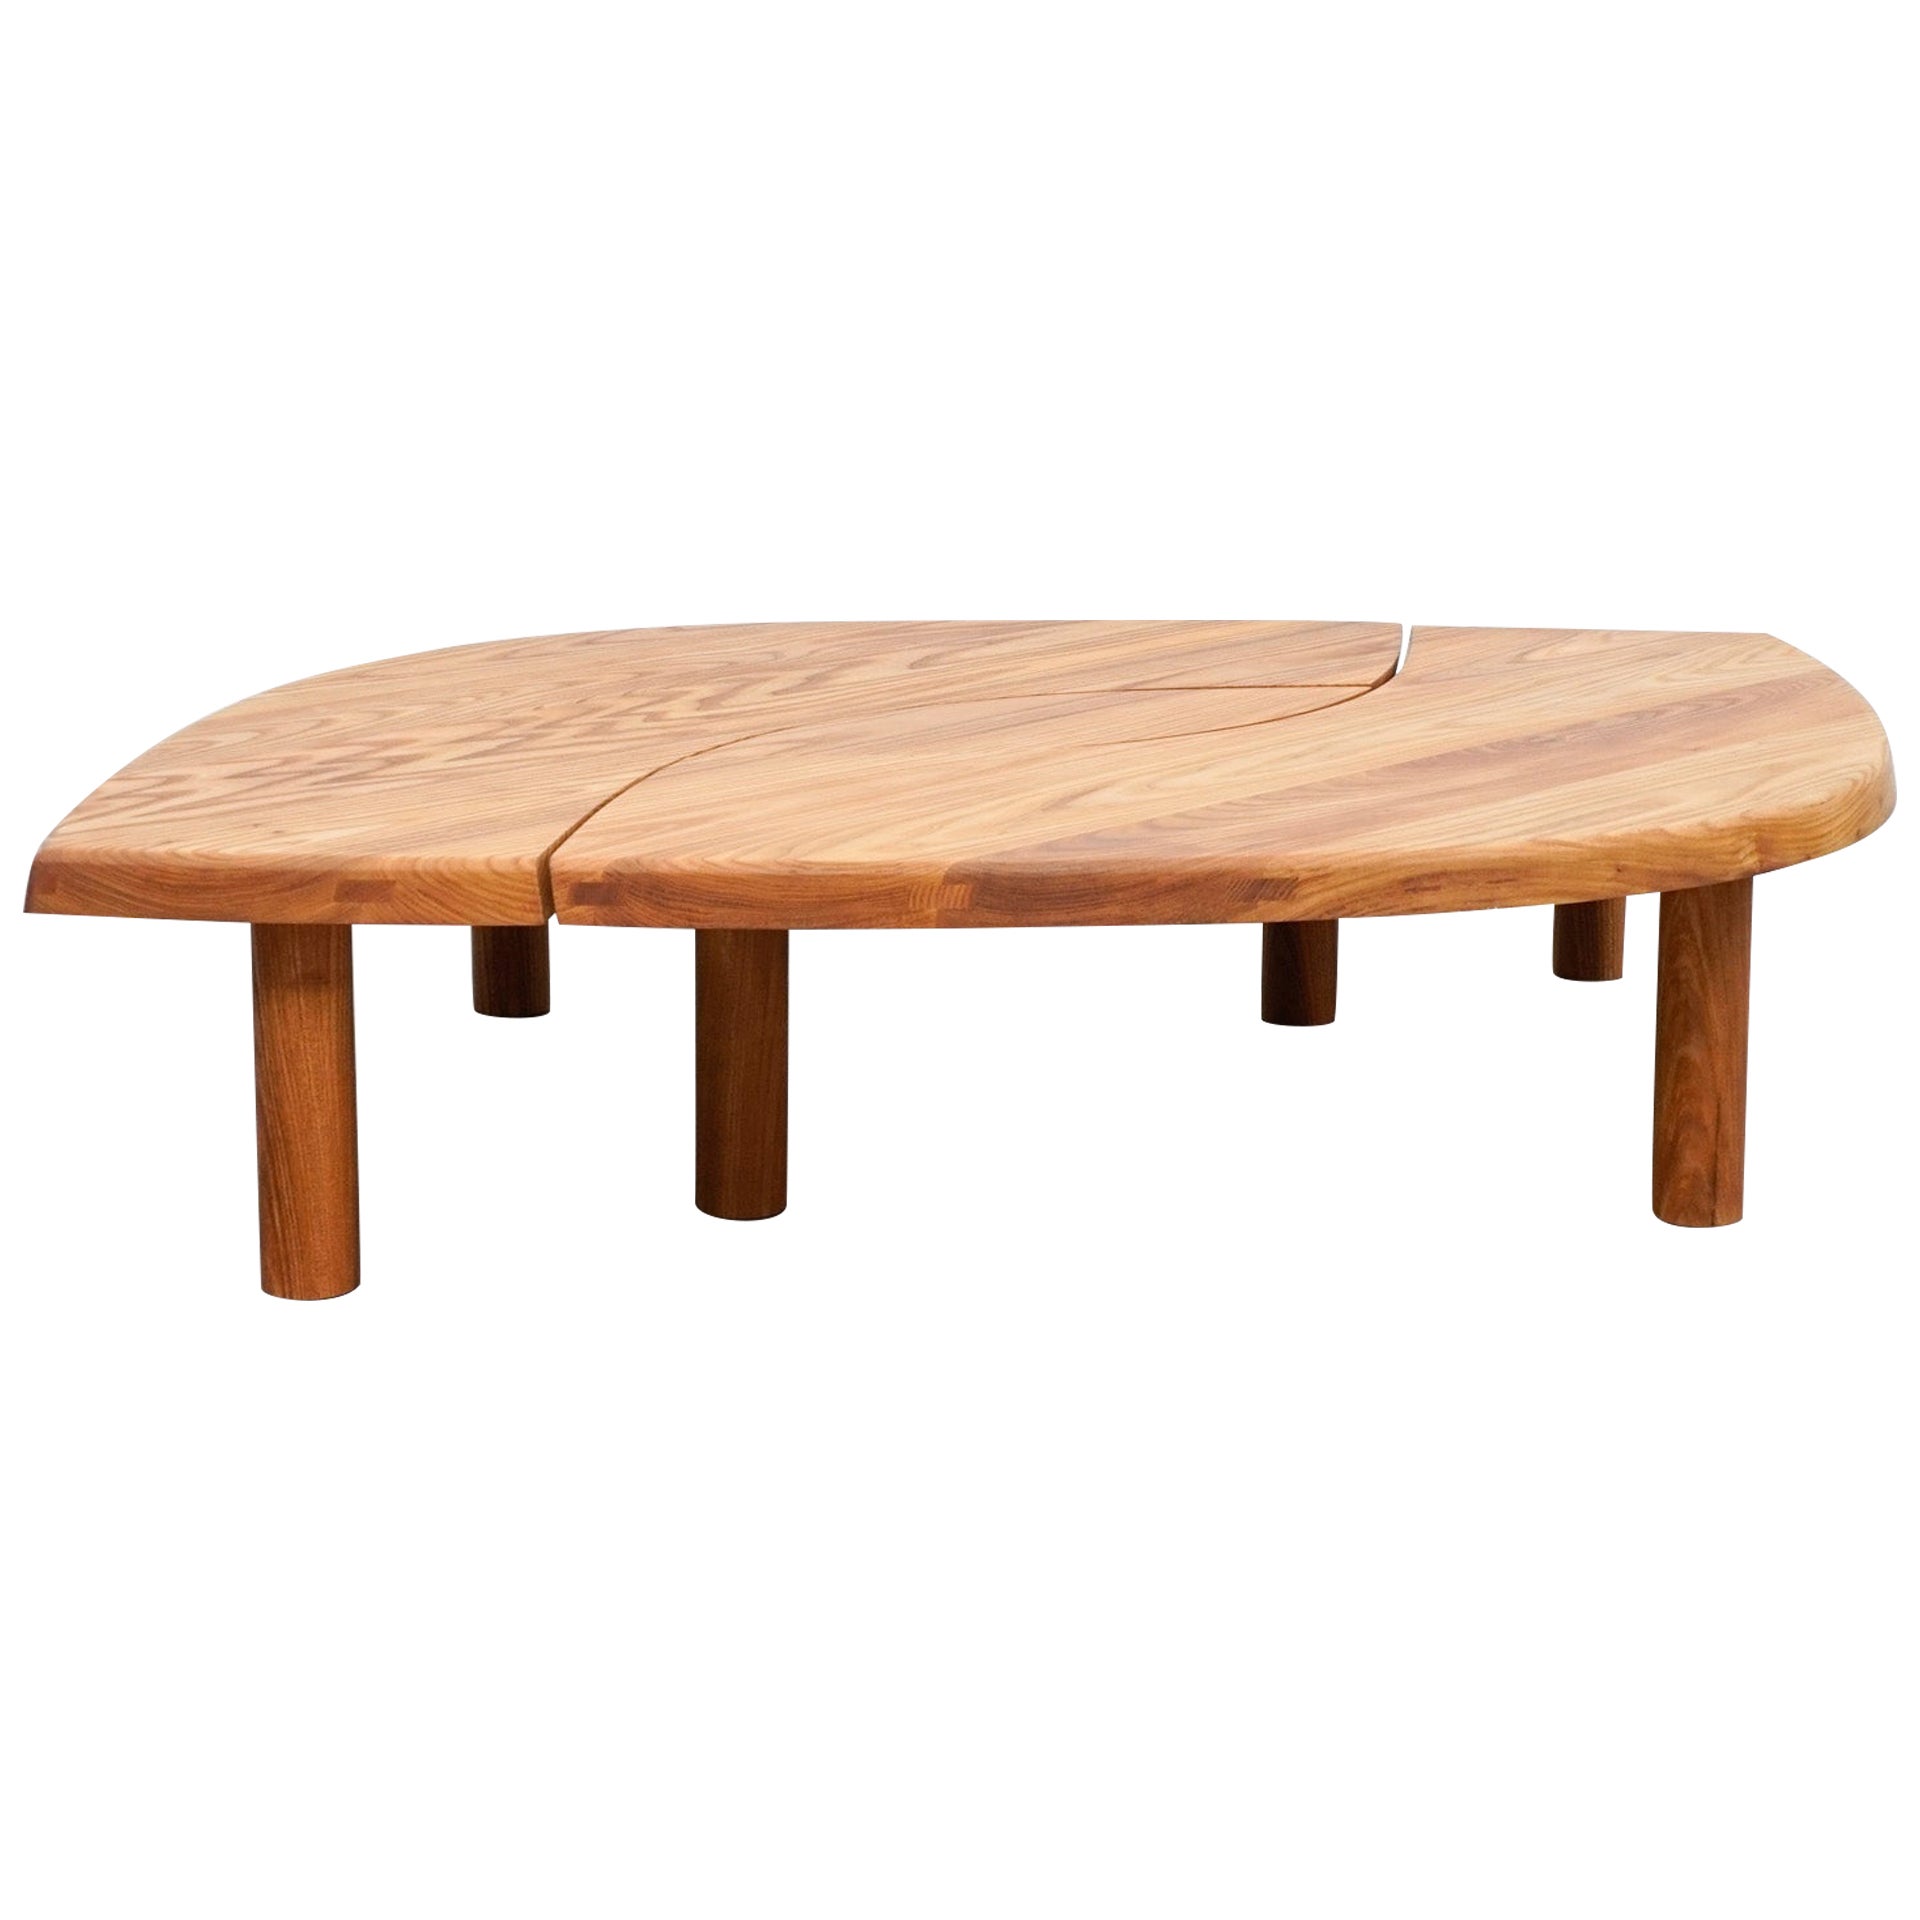 Pierre Chapo T22 Table, Solid Elmwood